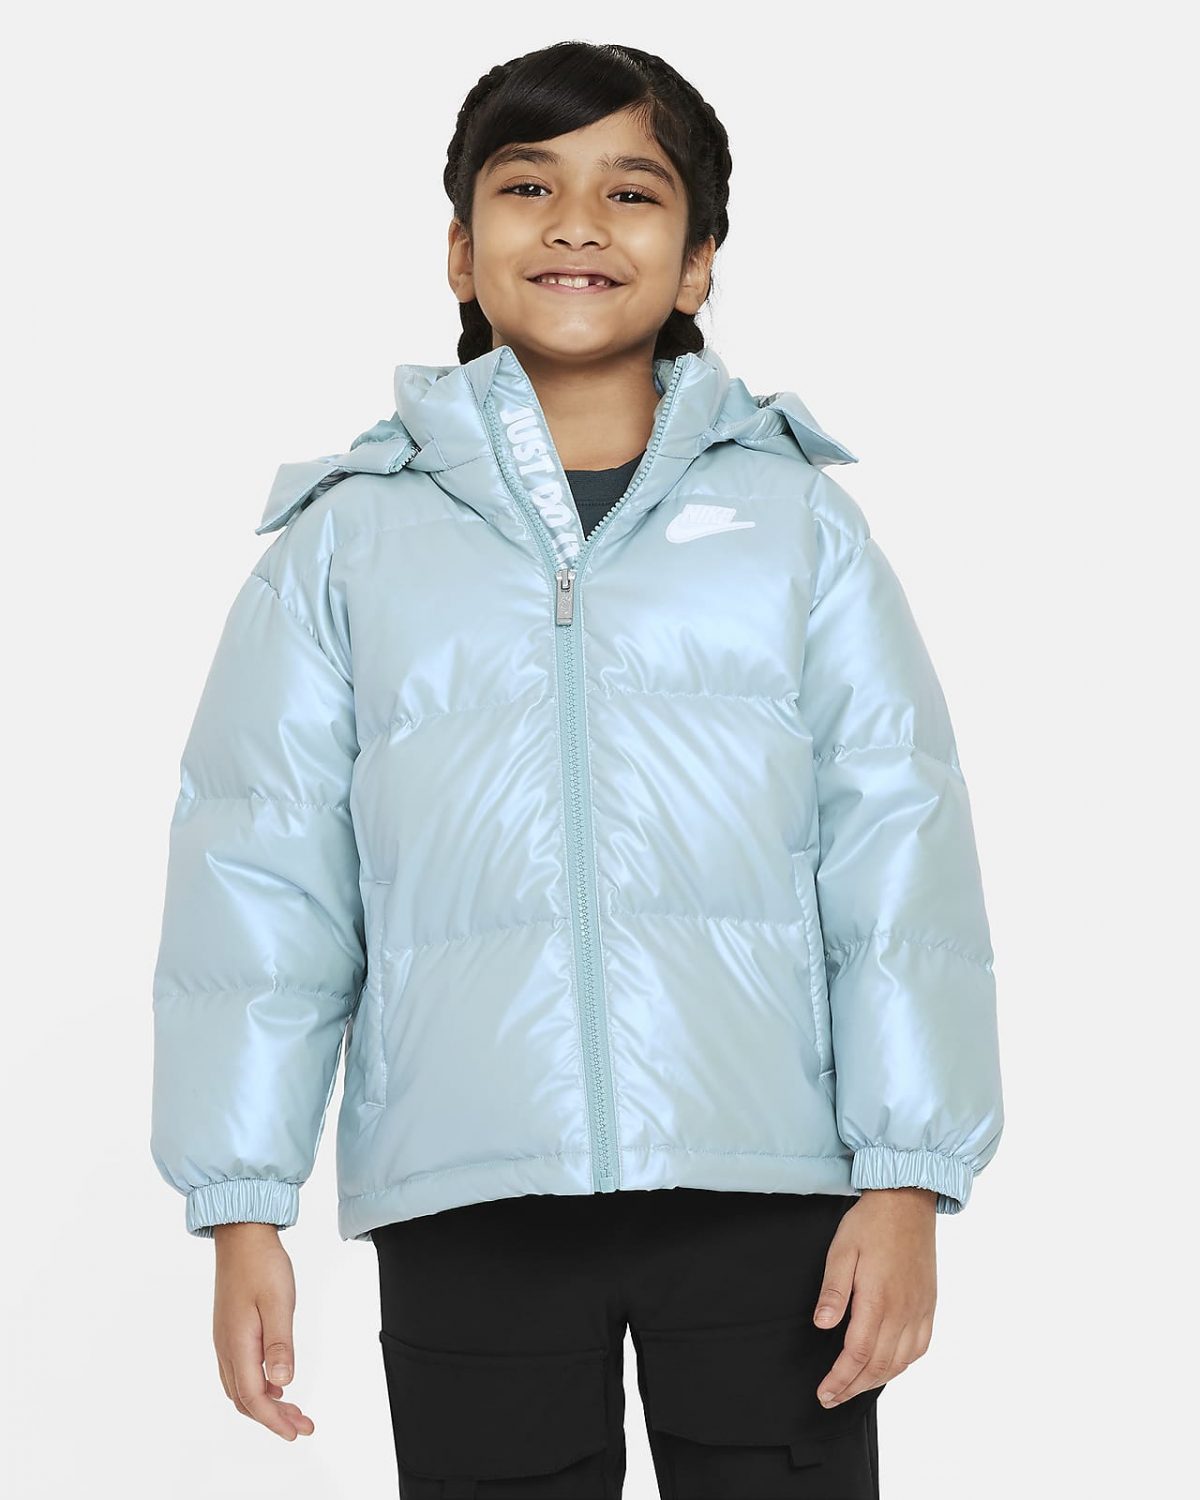 Детская куртка Nike Twinkle фото